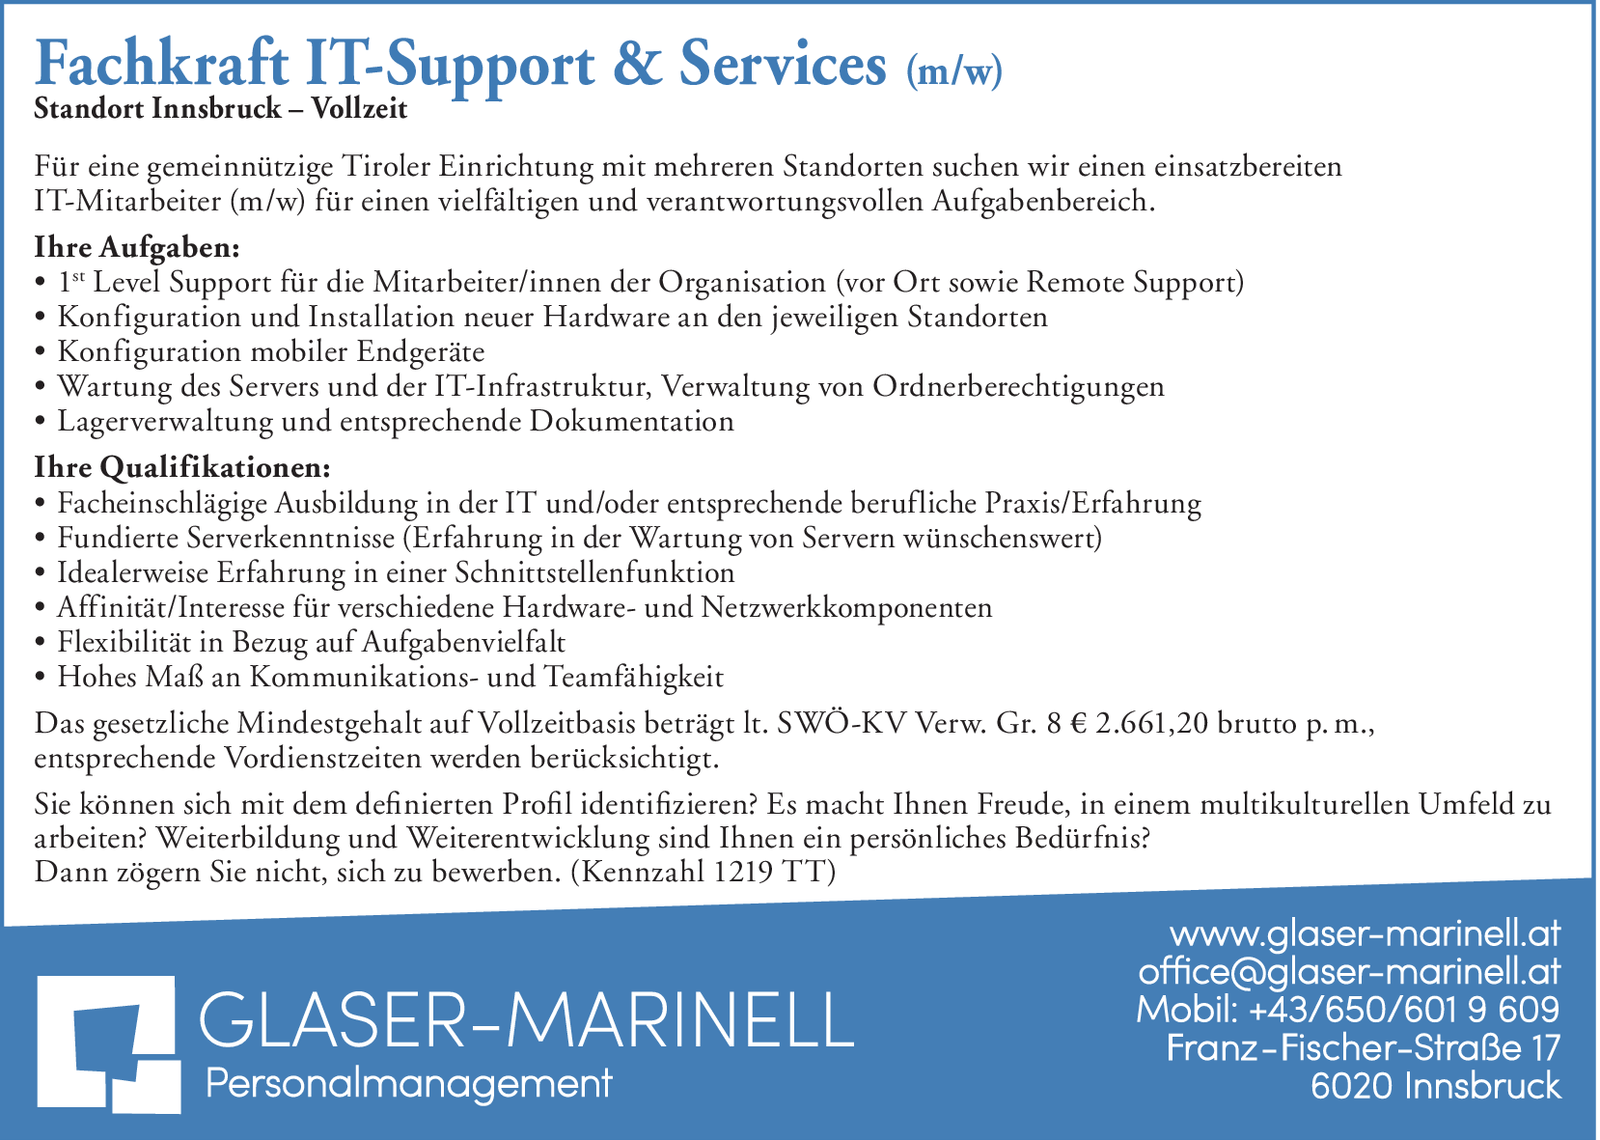 Fachkraft IT-Support Services m/w 